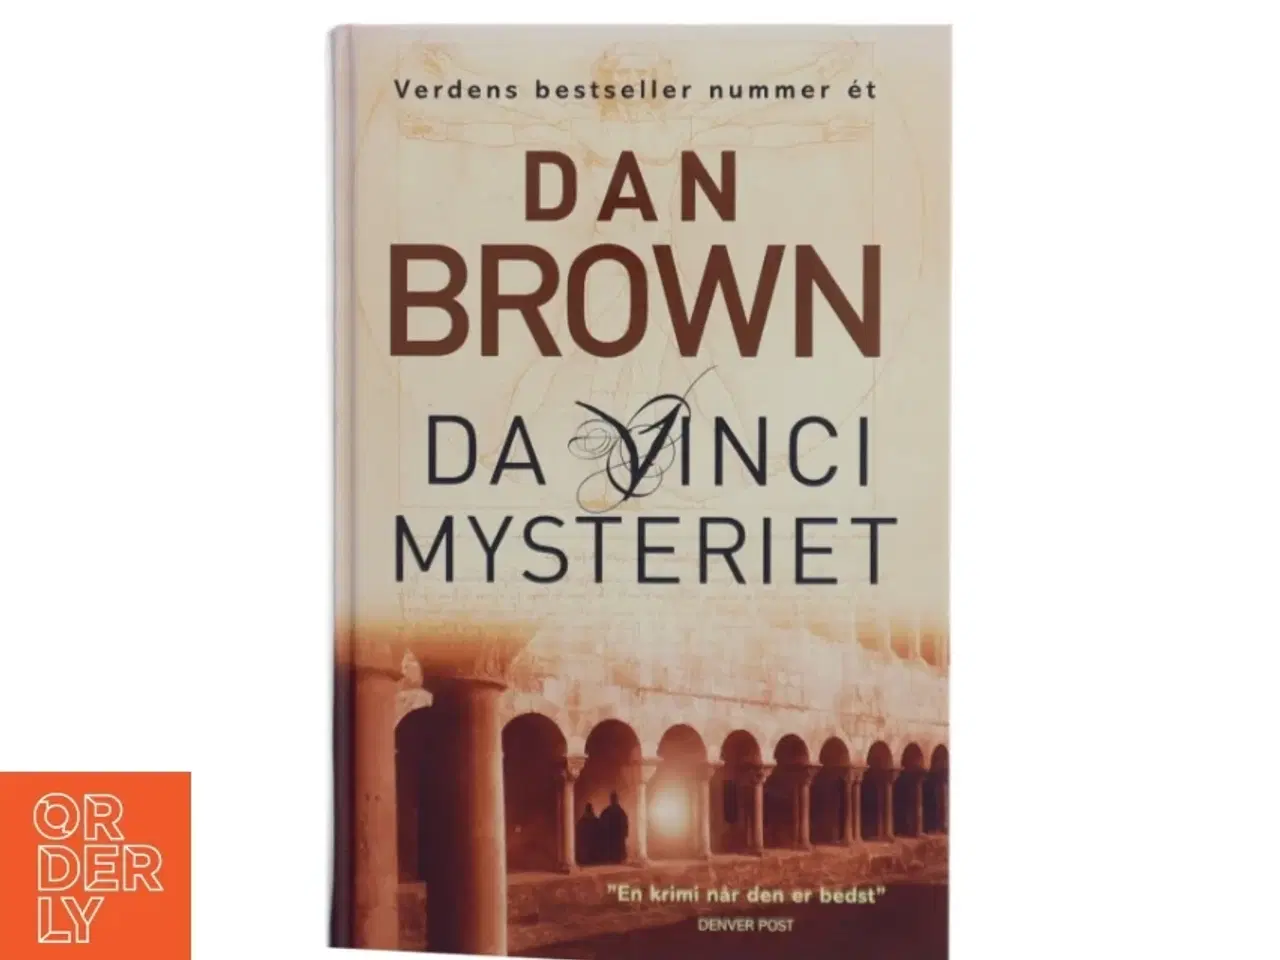 Billede 1 - Dan Brown, Da Vinci mysteriet